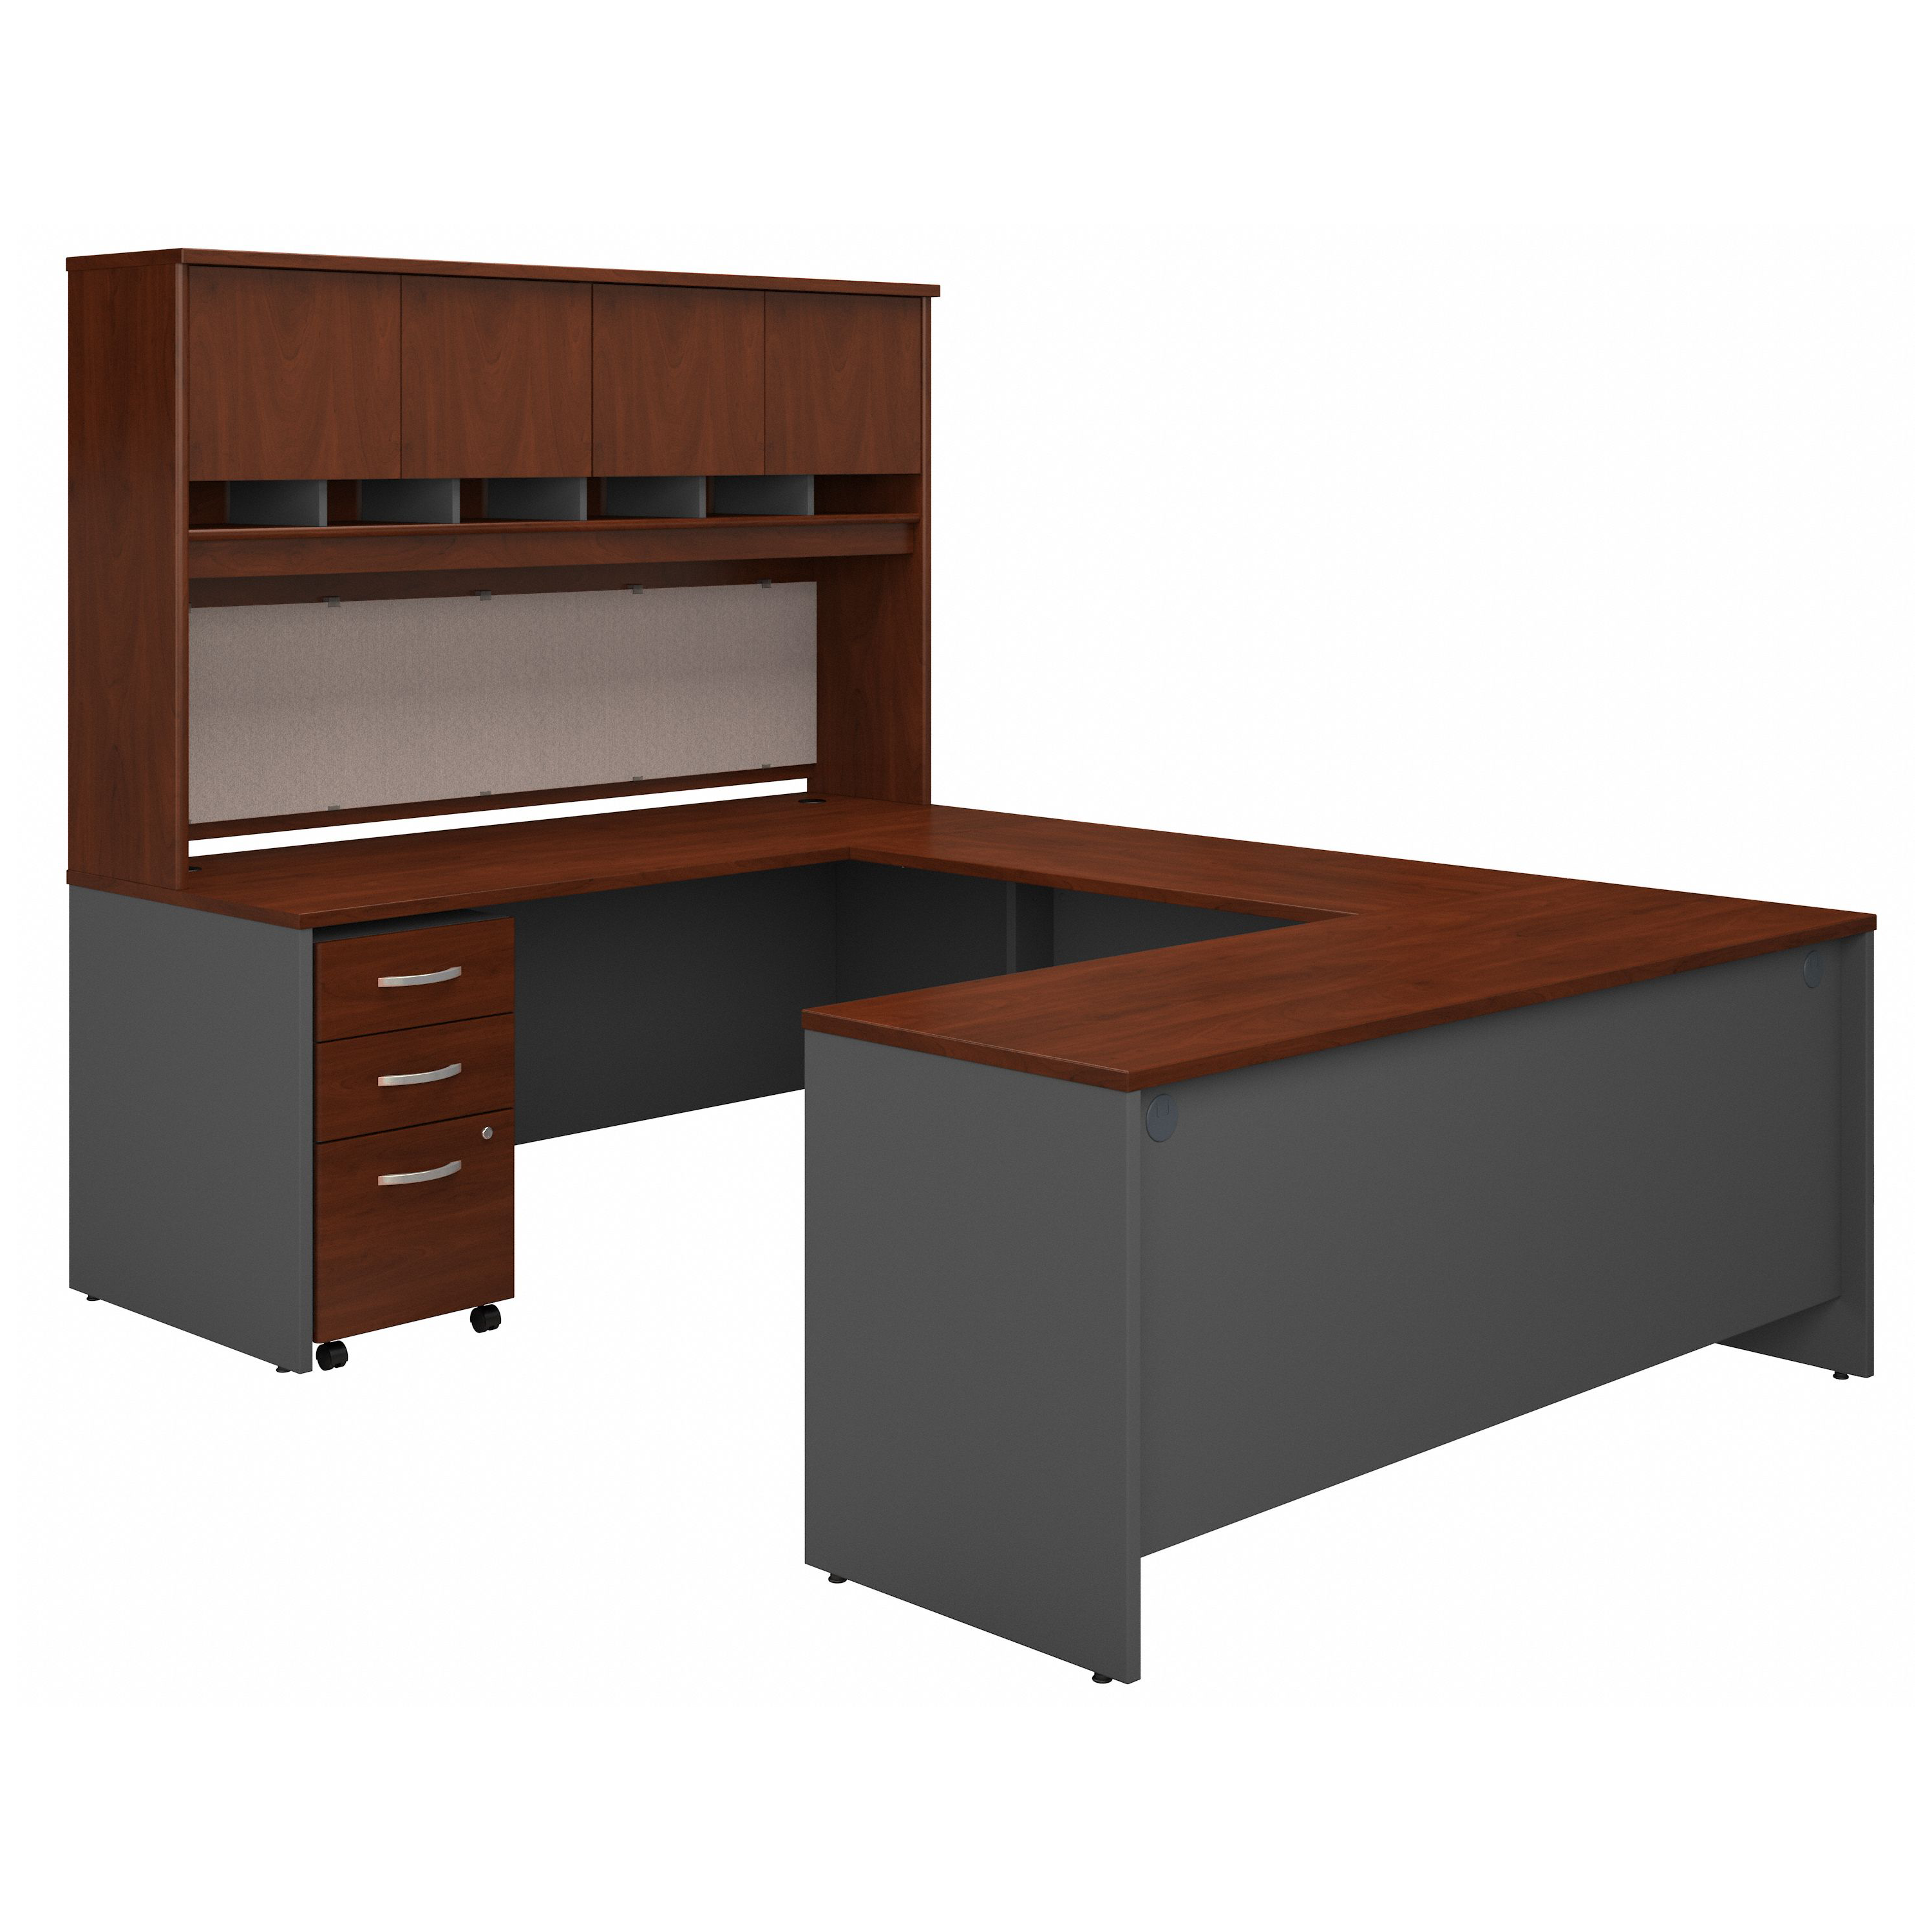 Shop Bush Business Furniture Series C 72W U Shaped Desk with Hutch and Storage 02 SRC094HCSU #color_hansen cherry/graphite gray